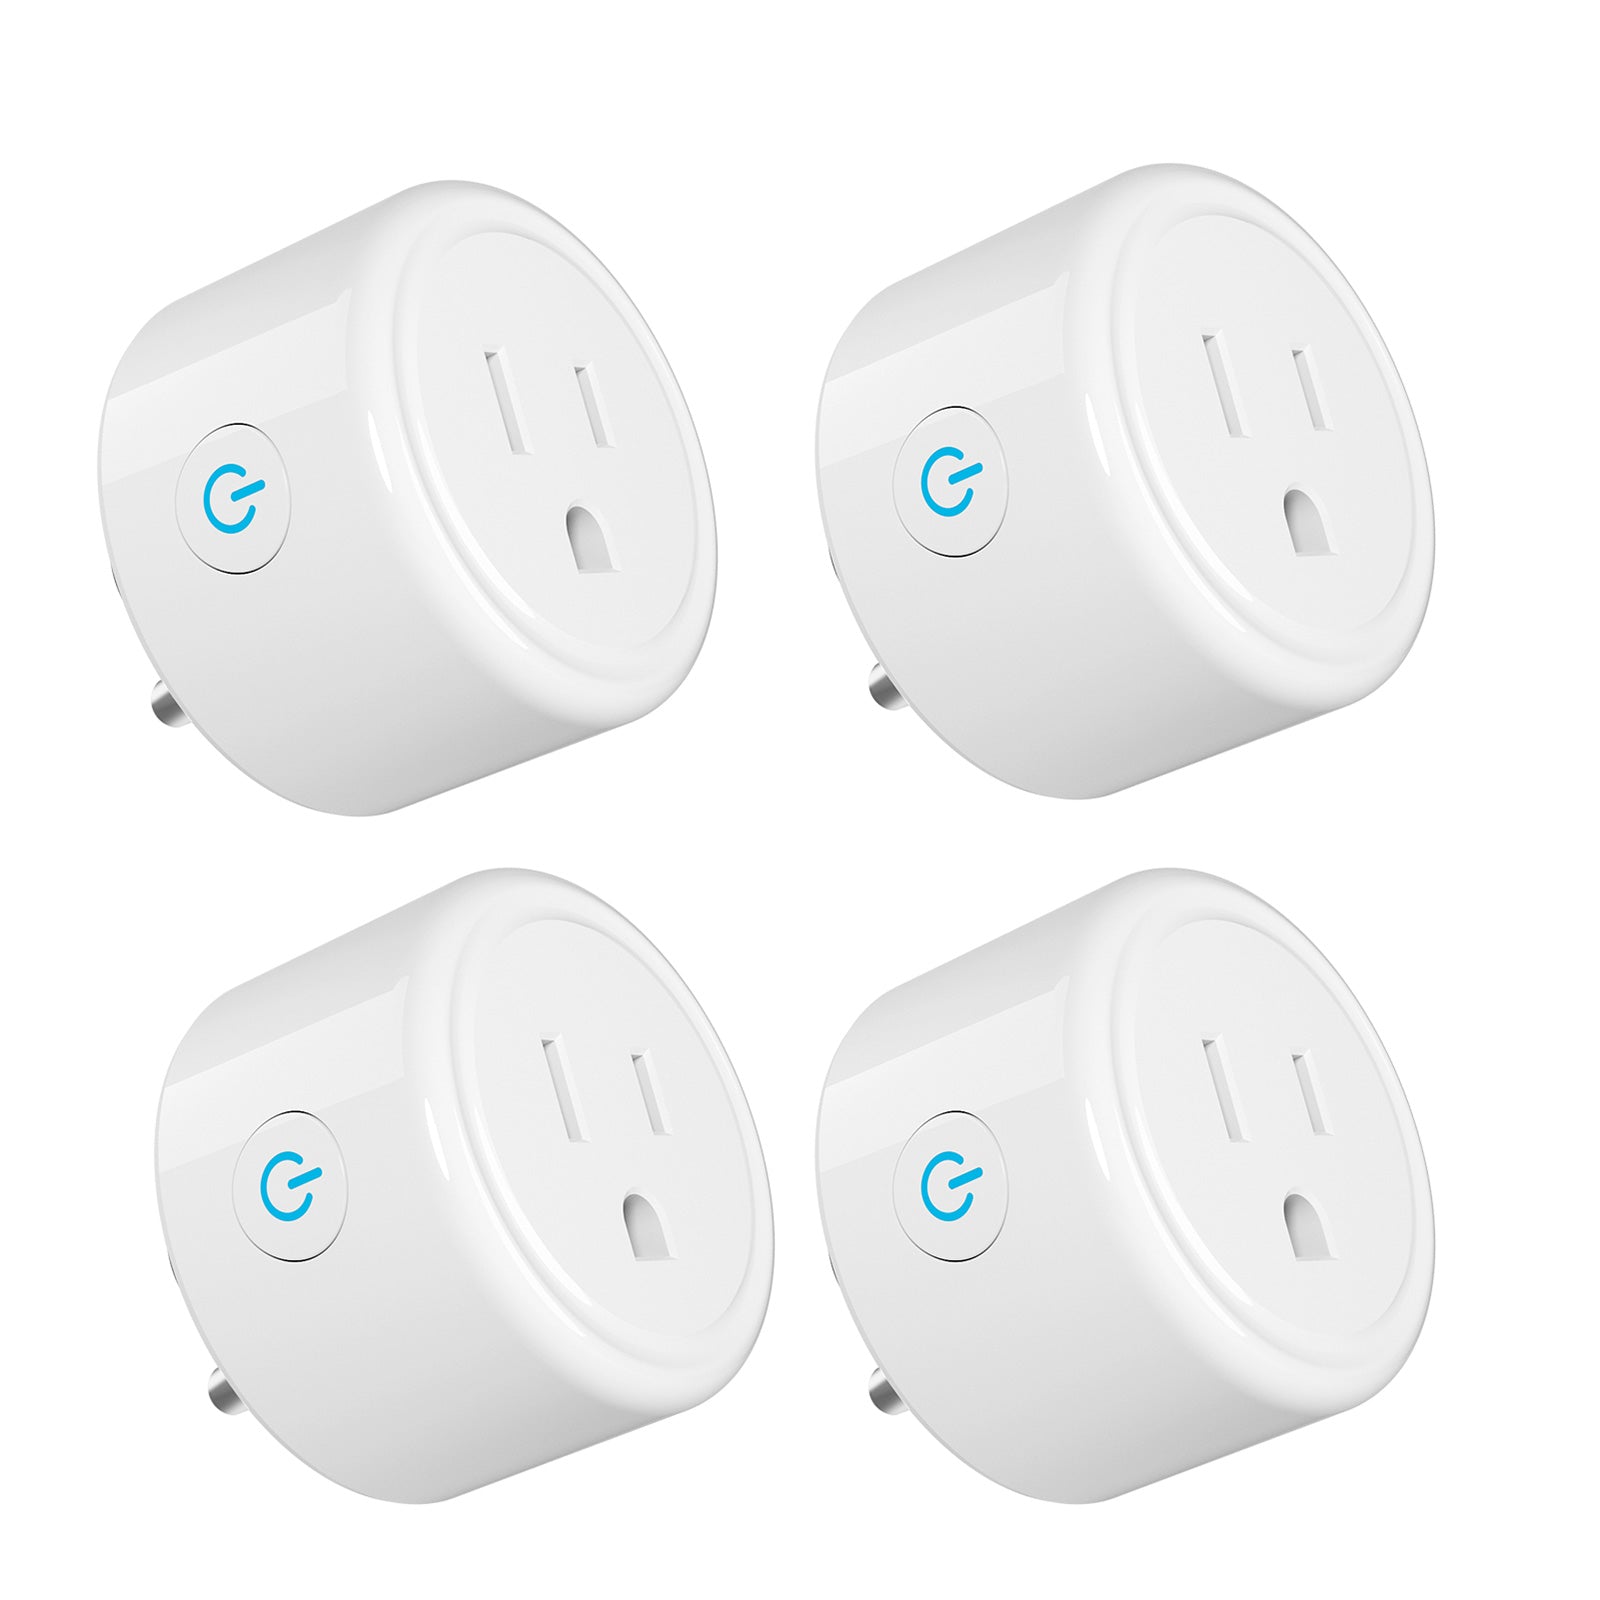 Gosund Smart Plug WP3 4 Pack